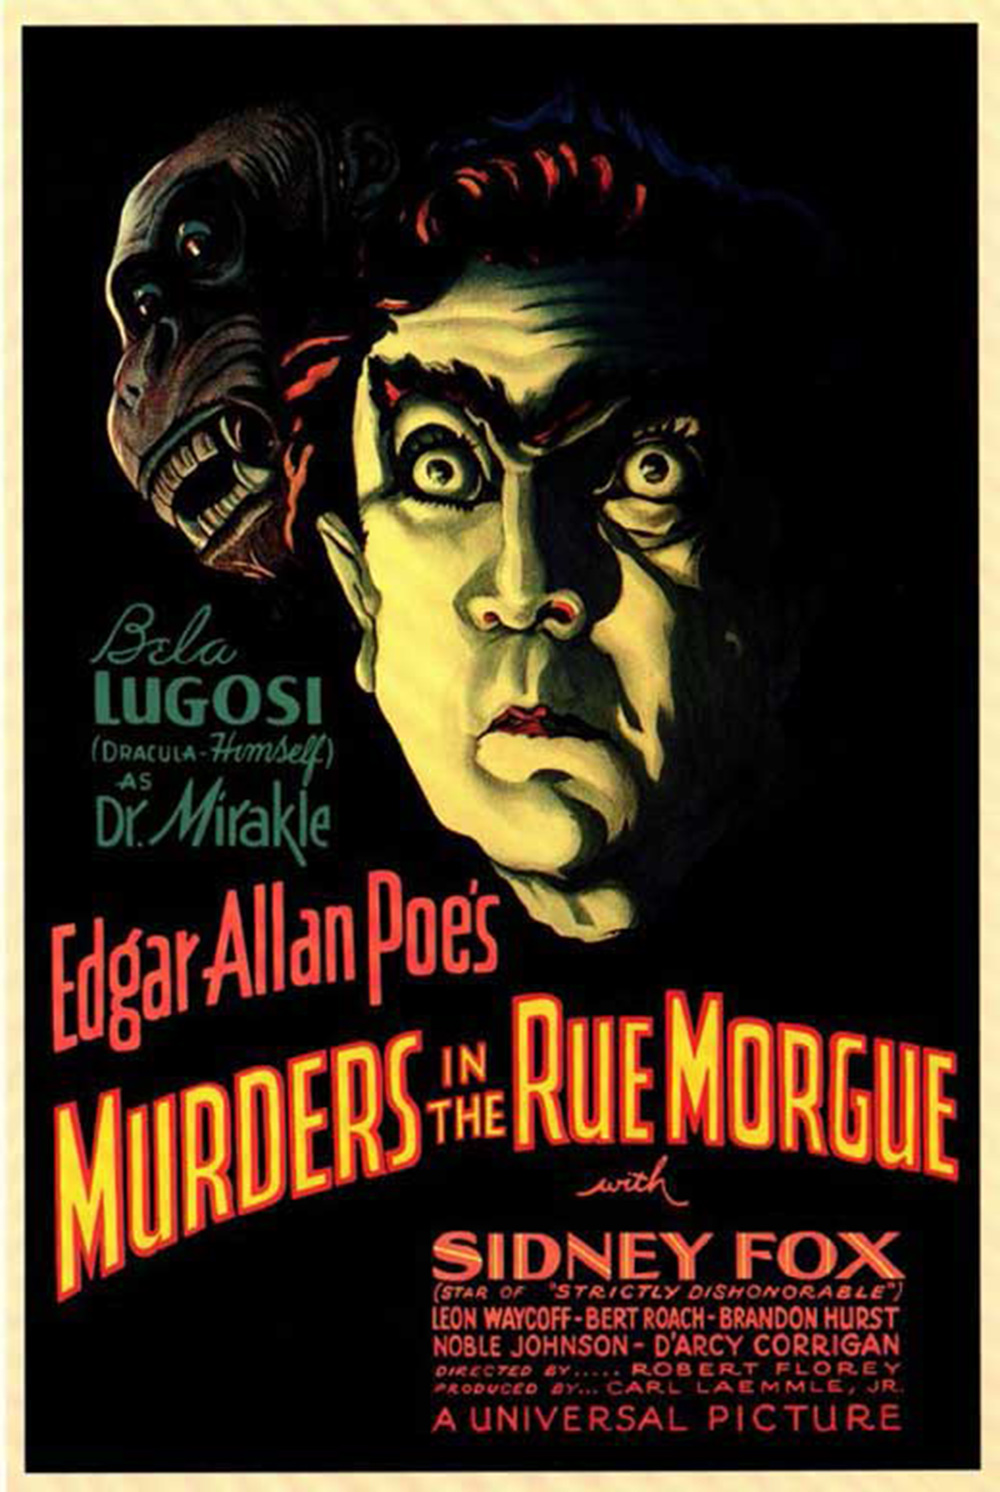 Murders In the Rue Morgue - 1932